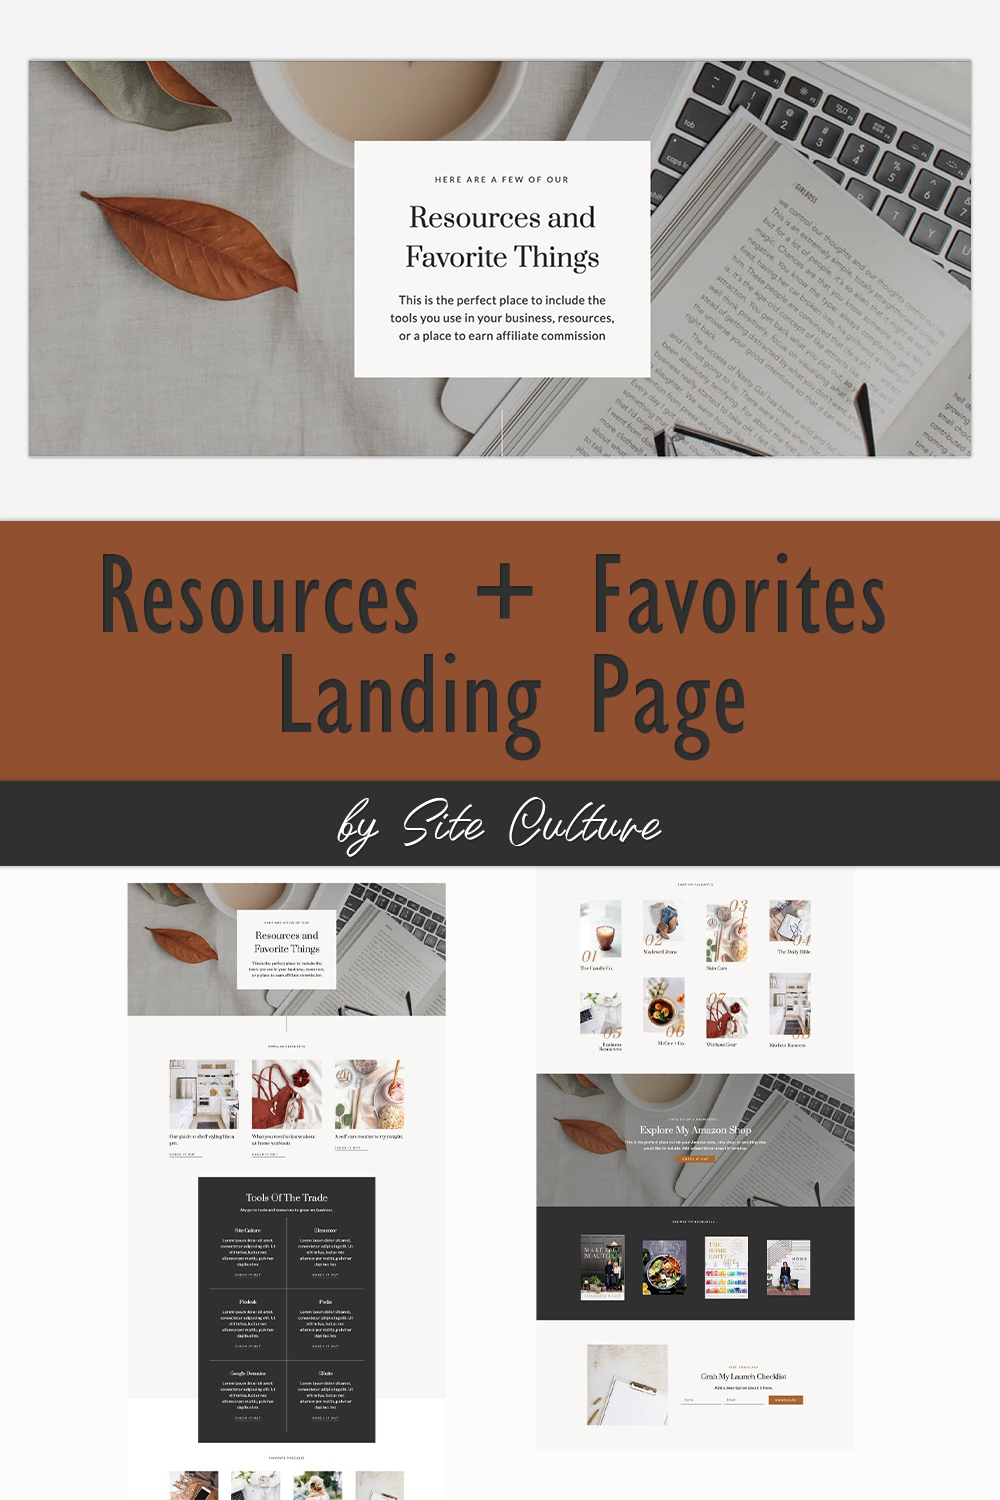 Resources favorites landing page images of pinterest.